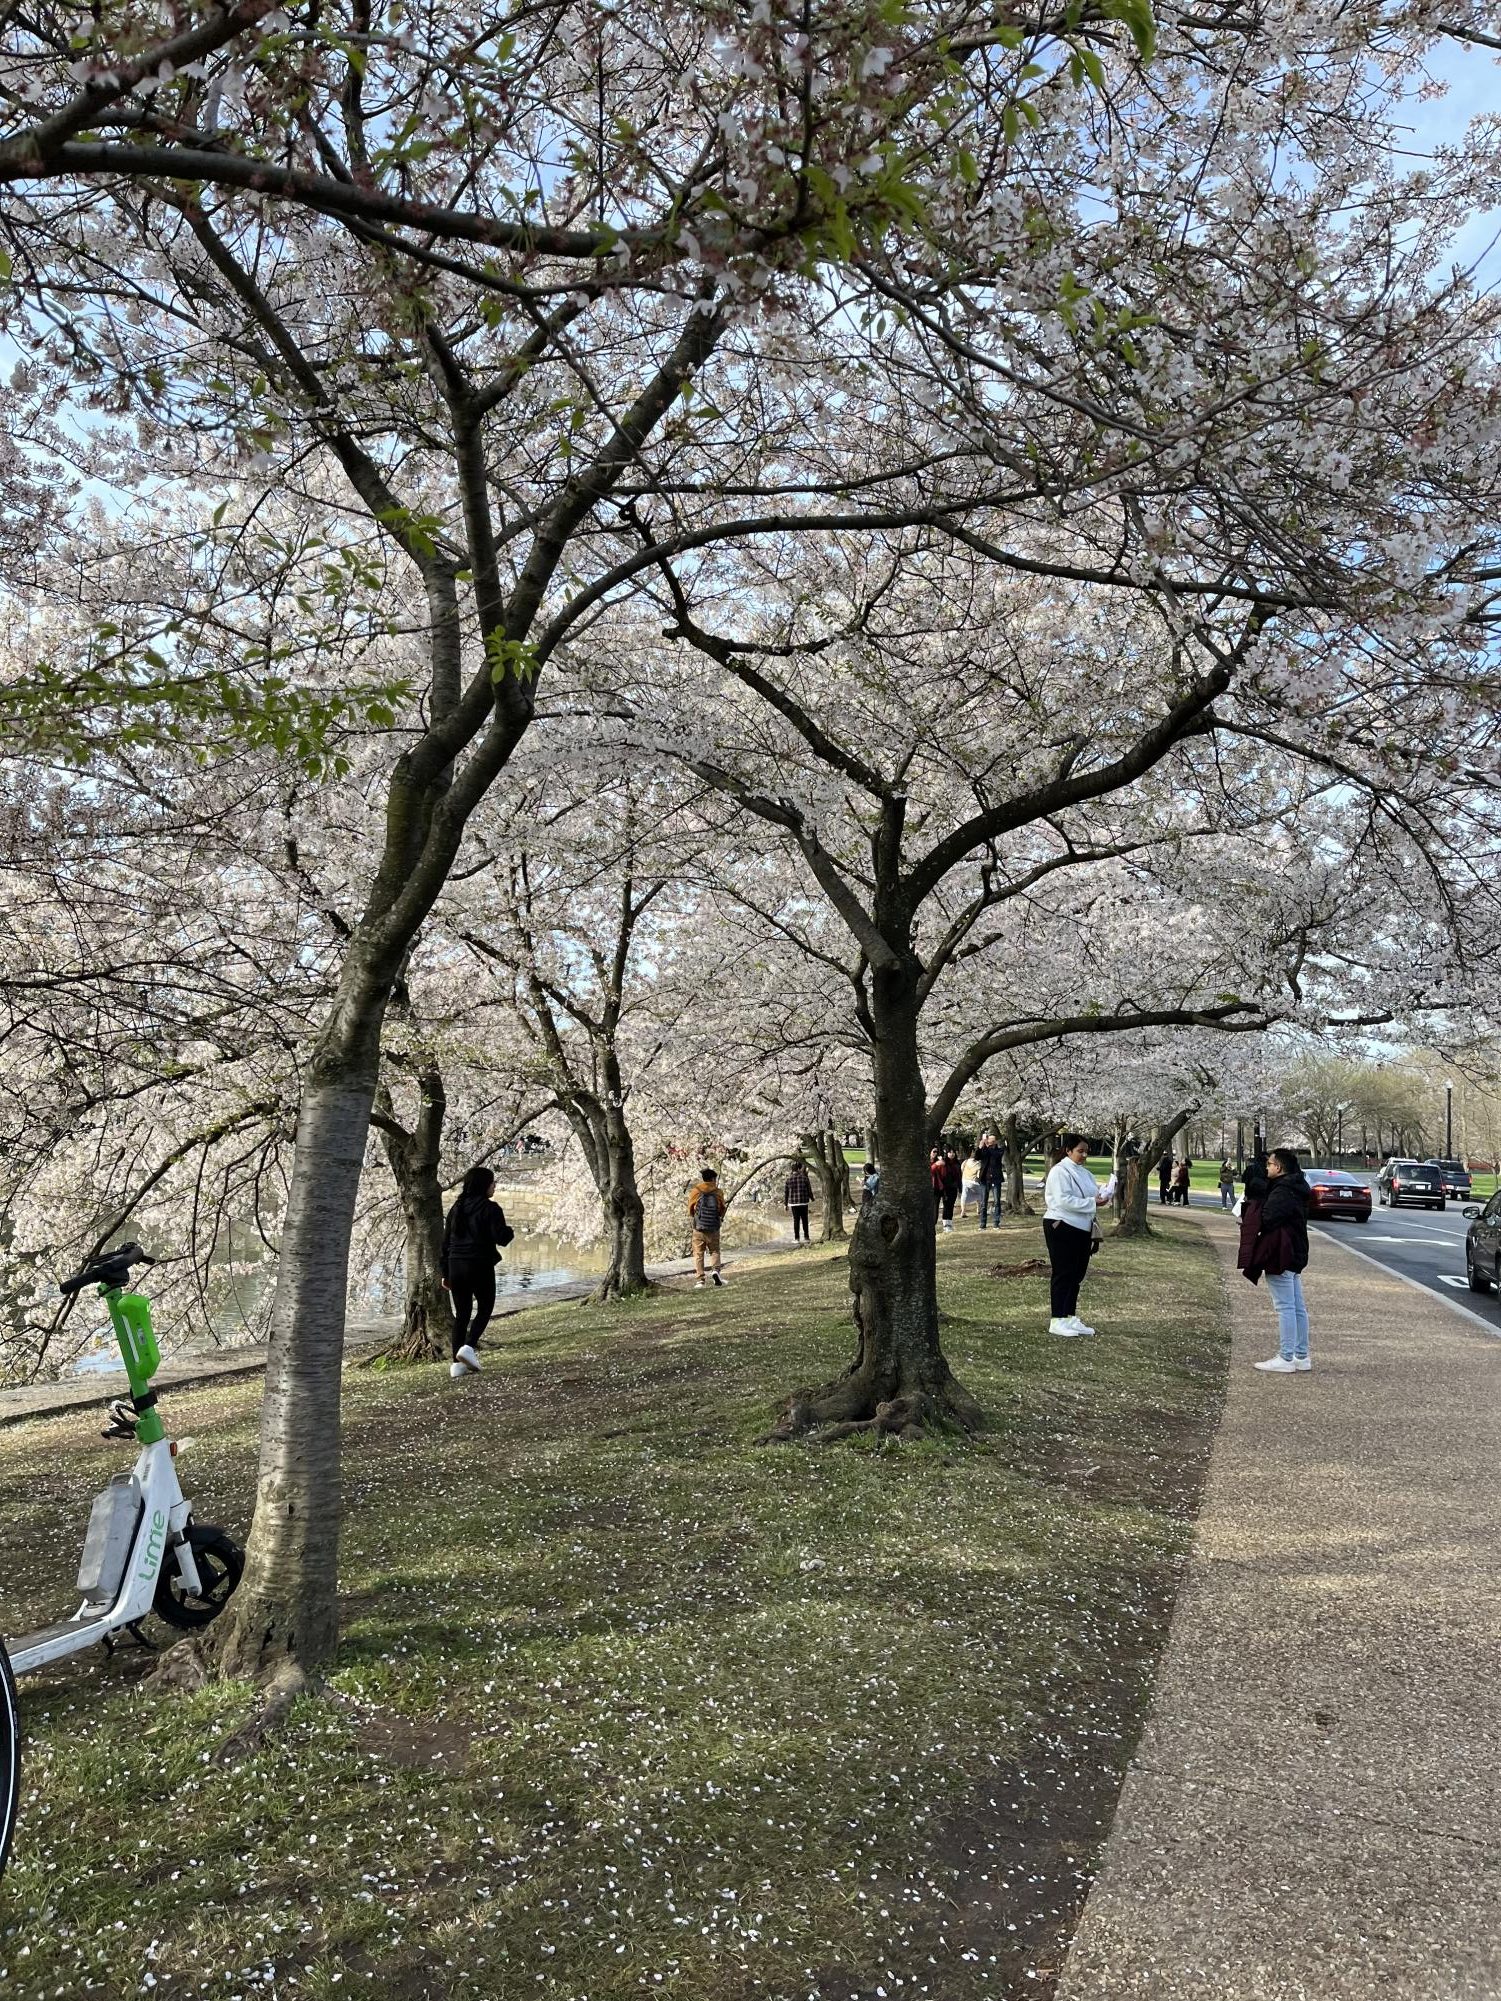 Washington+D.C.+during+Cherry+Blossom+Season%21